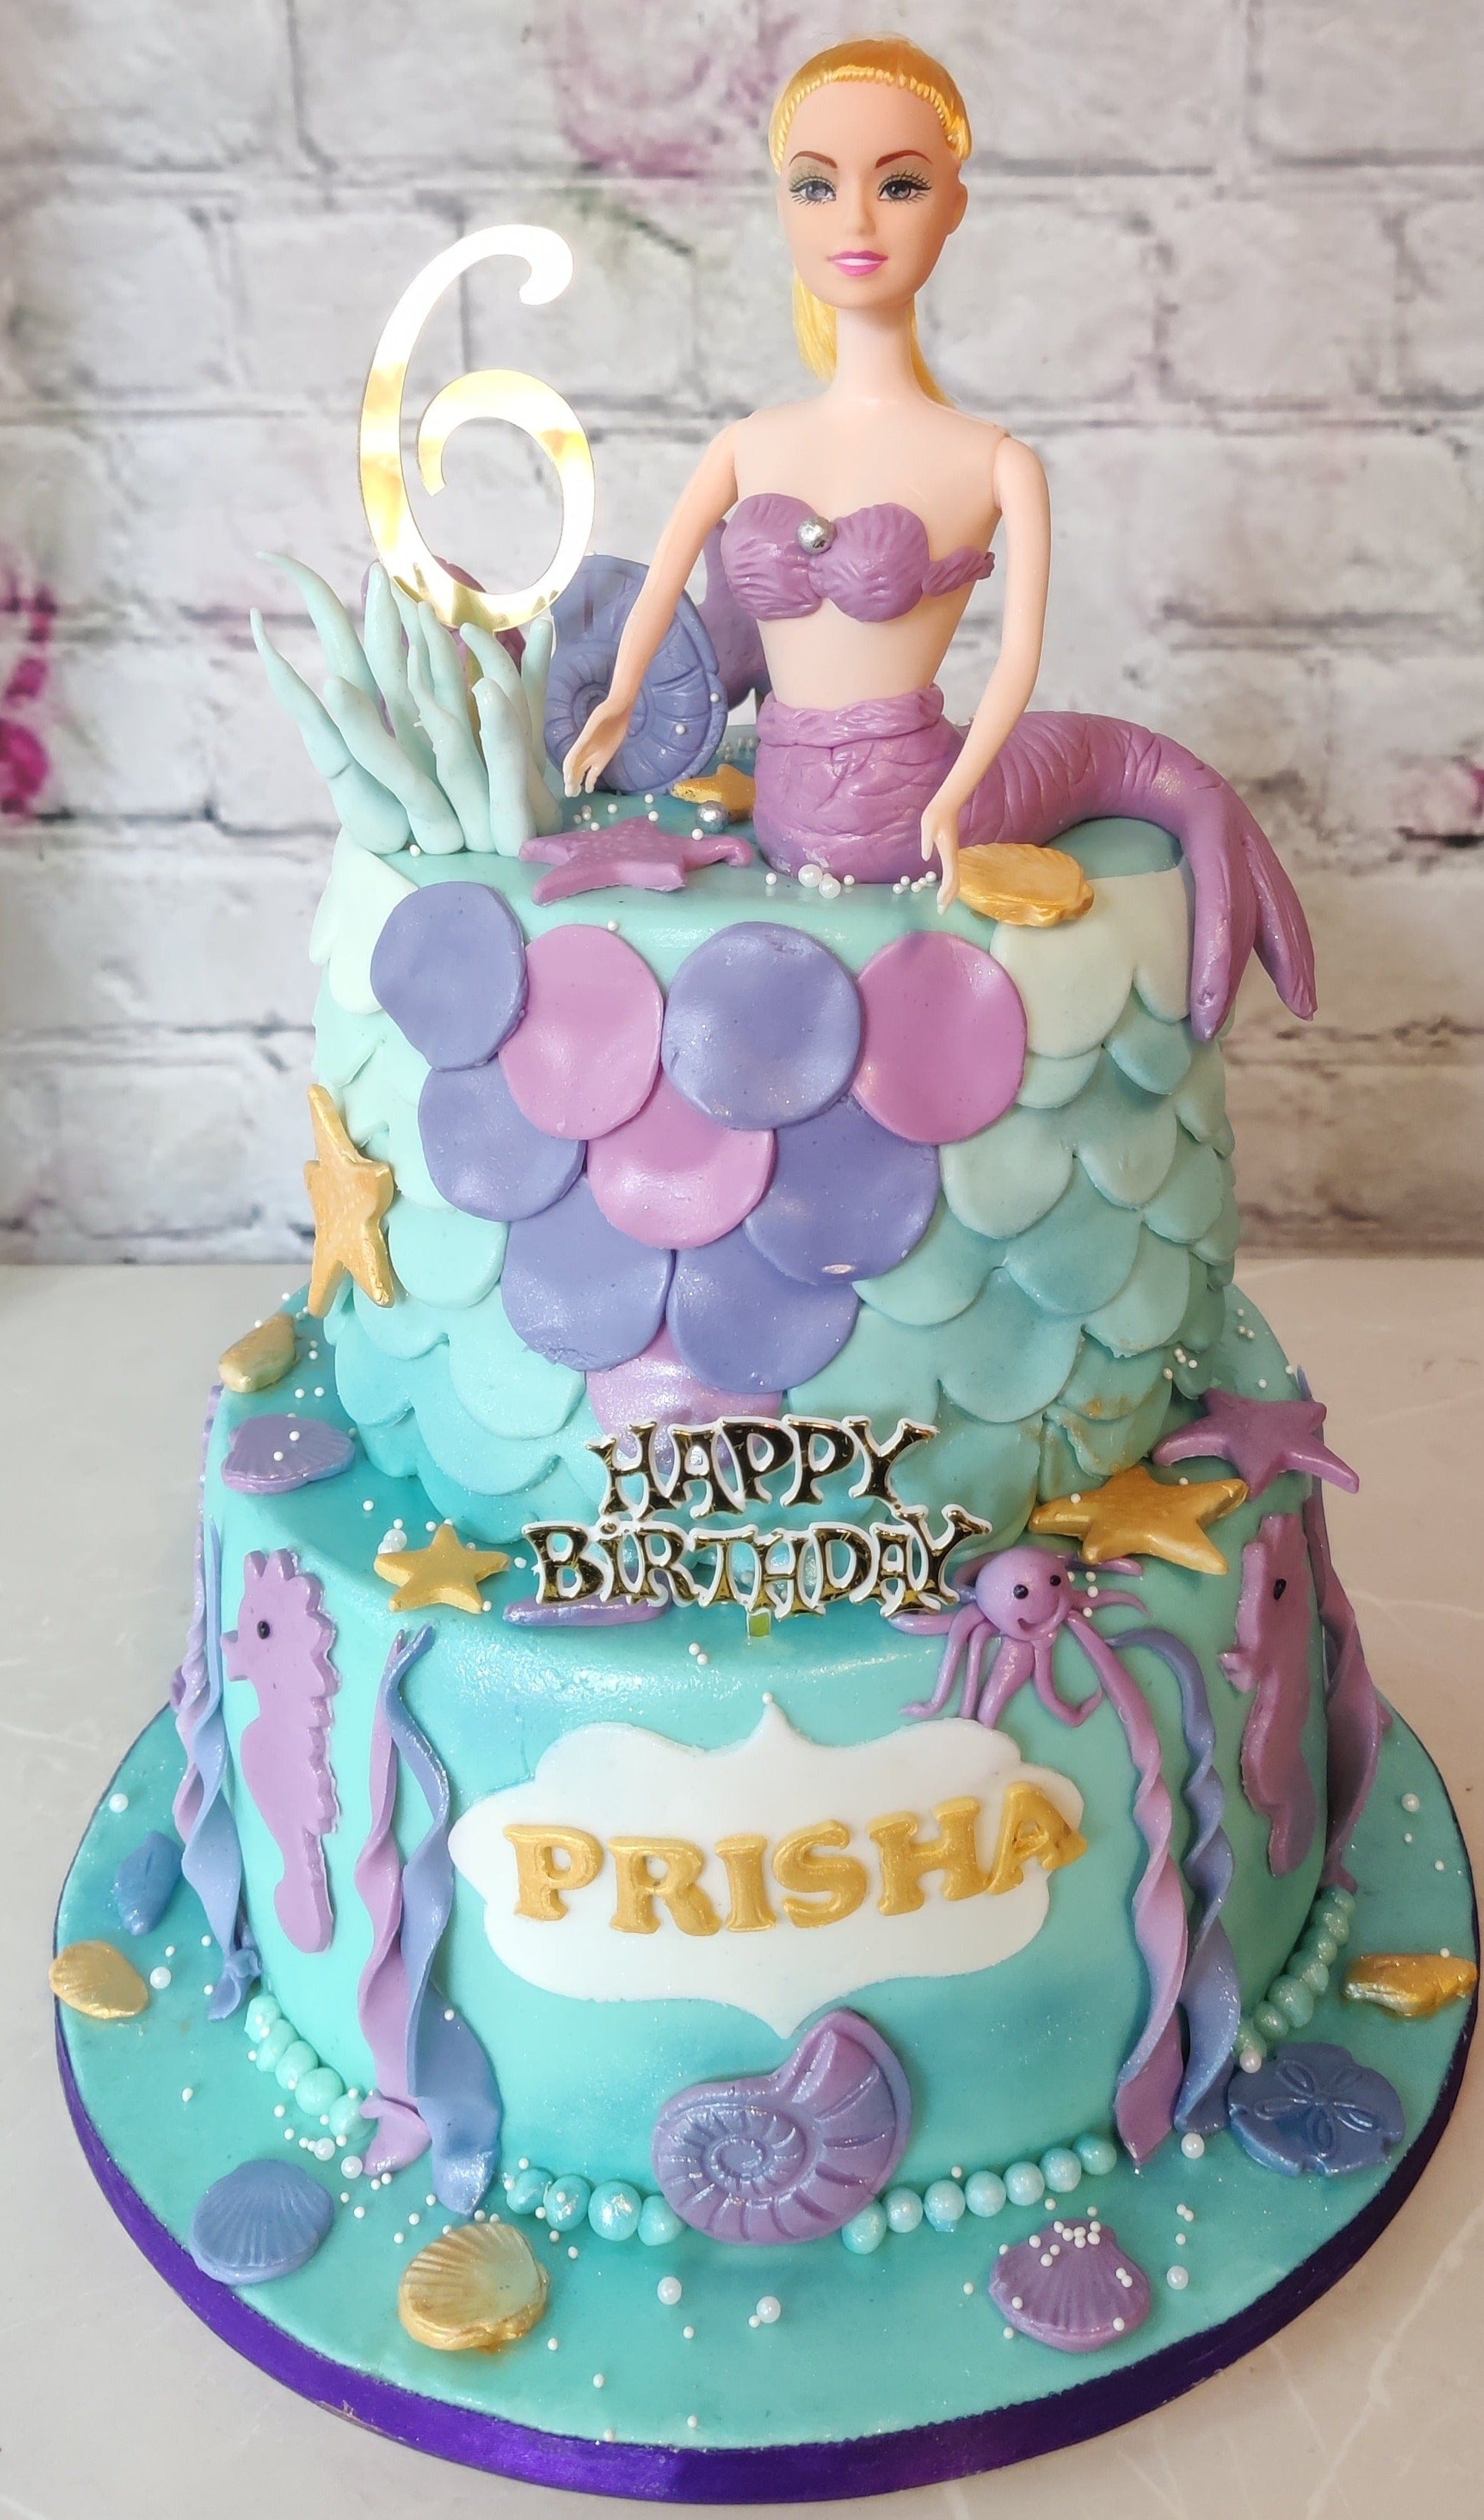 Happy Birthday Prisha! Elegang Sparkling Cupcake GIF Image. — Download on  Funimada.com